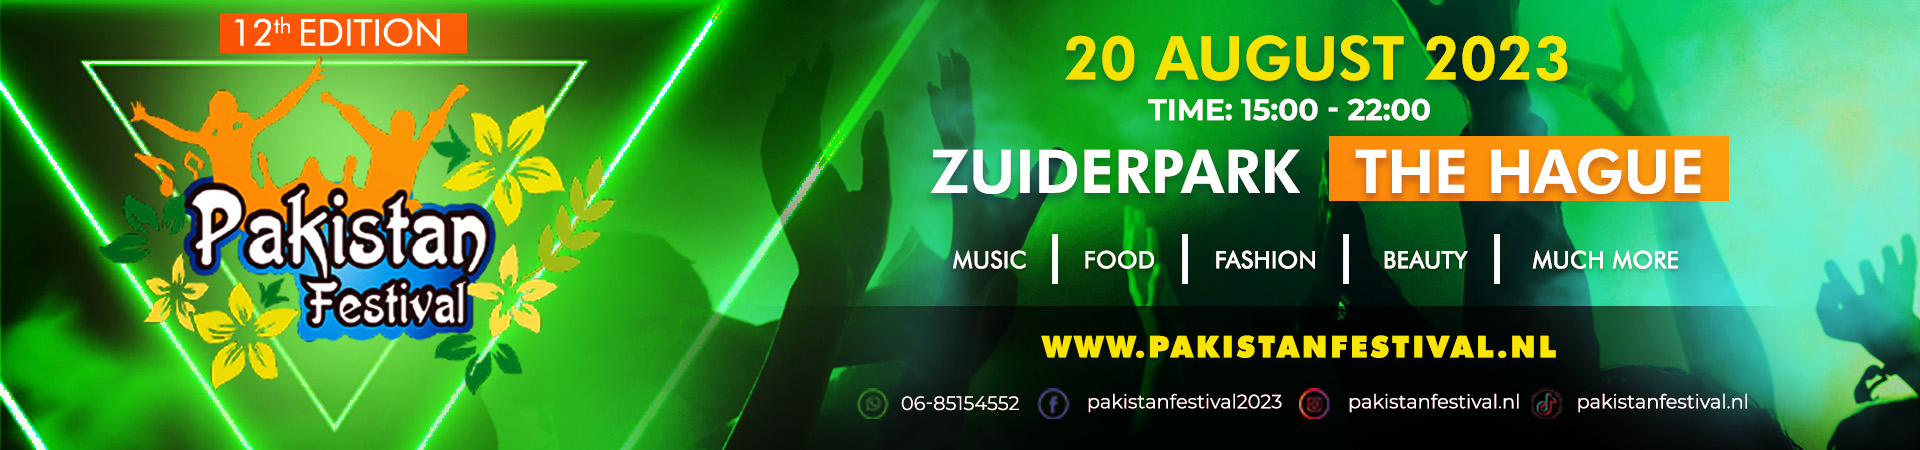 Pakistan Festival 2023